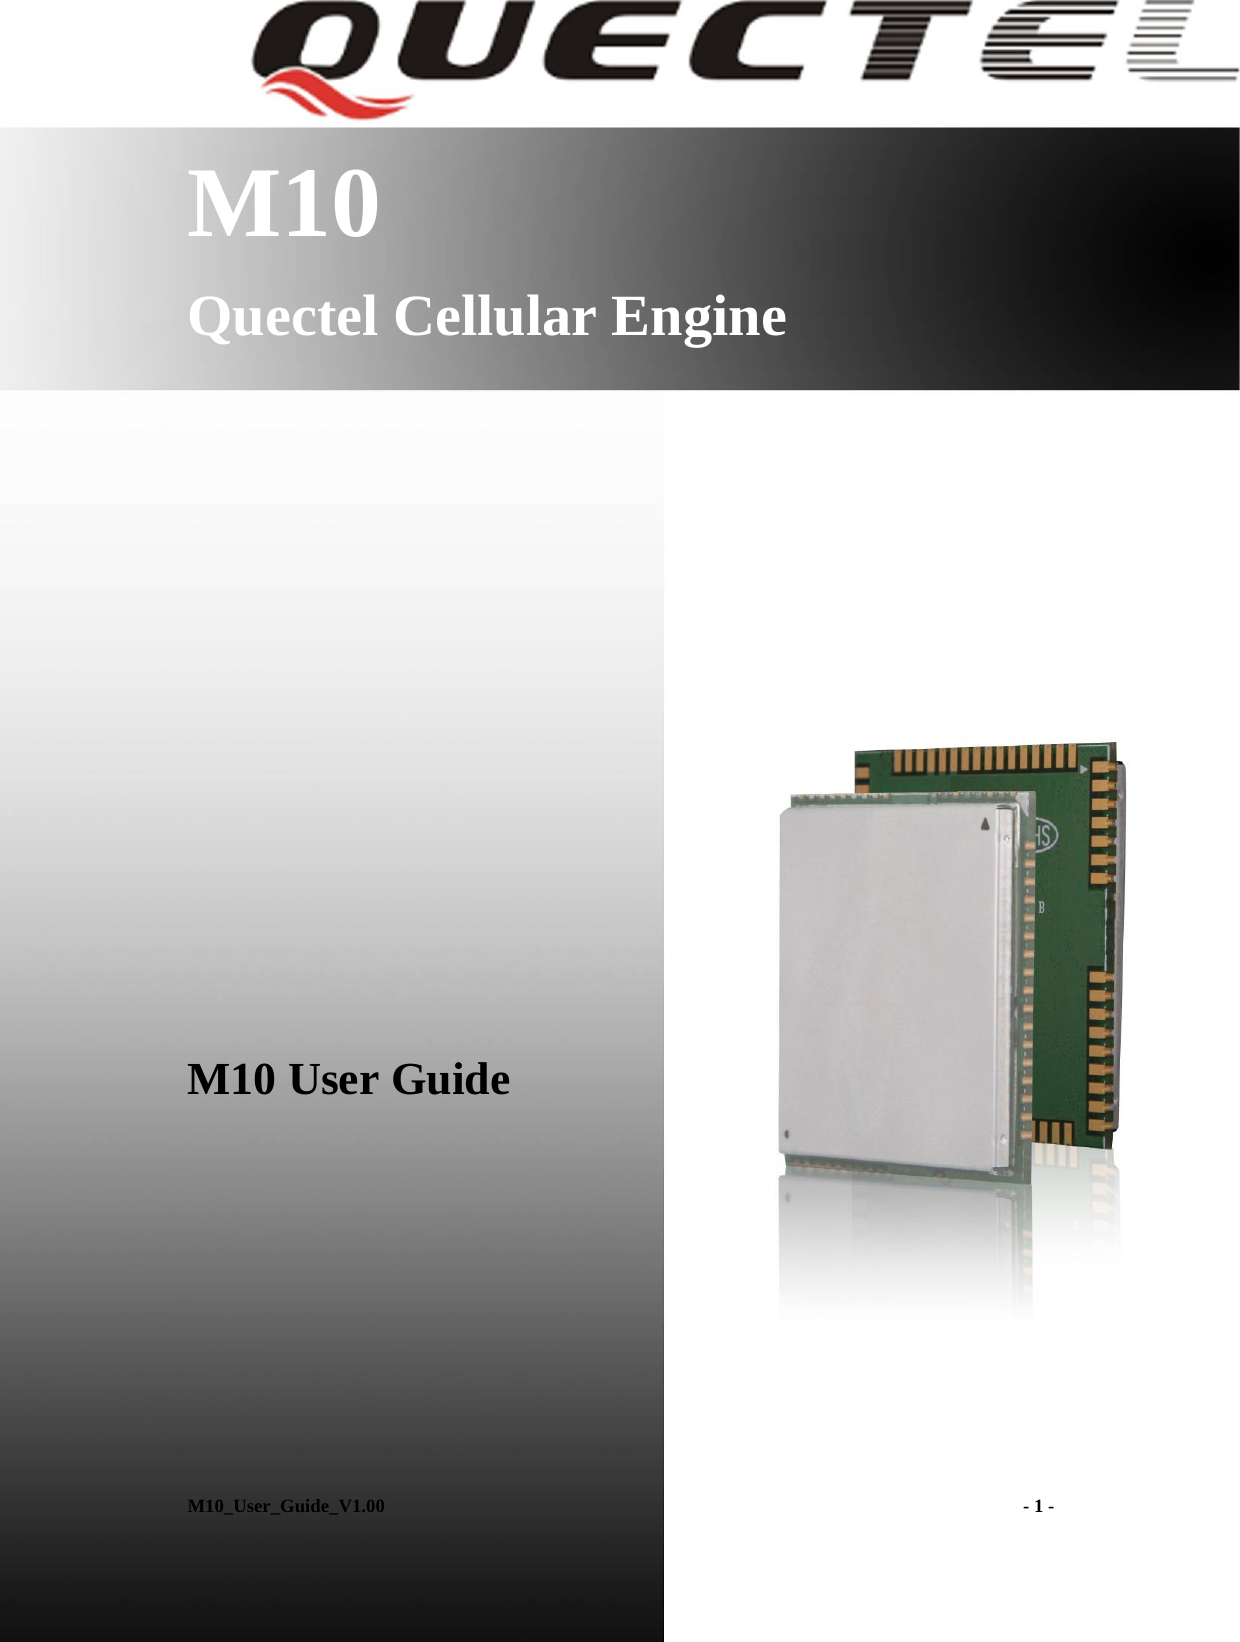 Quectel                                                                M10 Quectel Cellular Engine                  M10 User Guide          M10_User_Guide_V1.00                                                                    - 1 -   